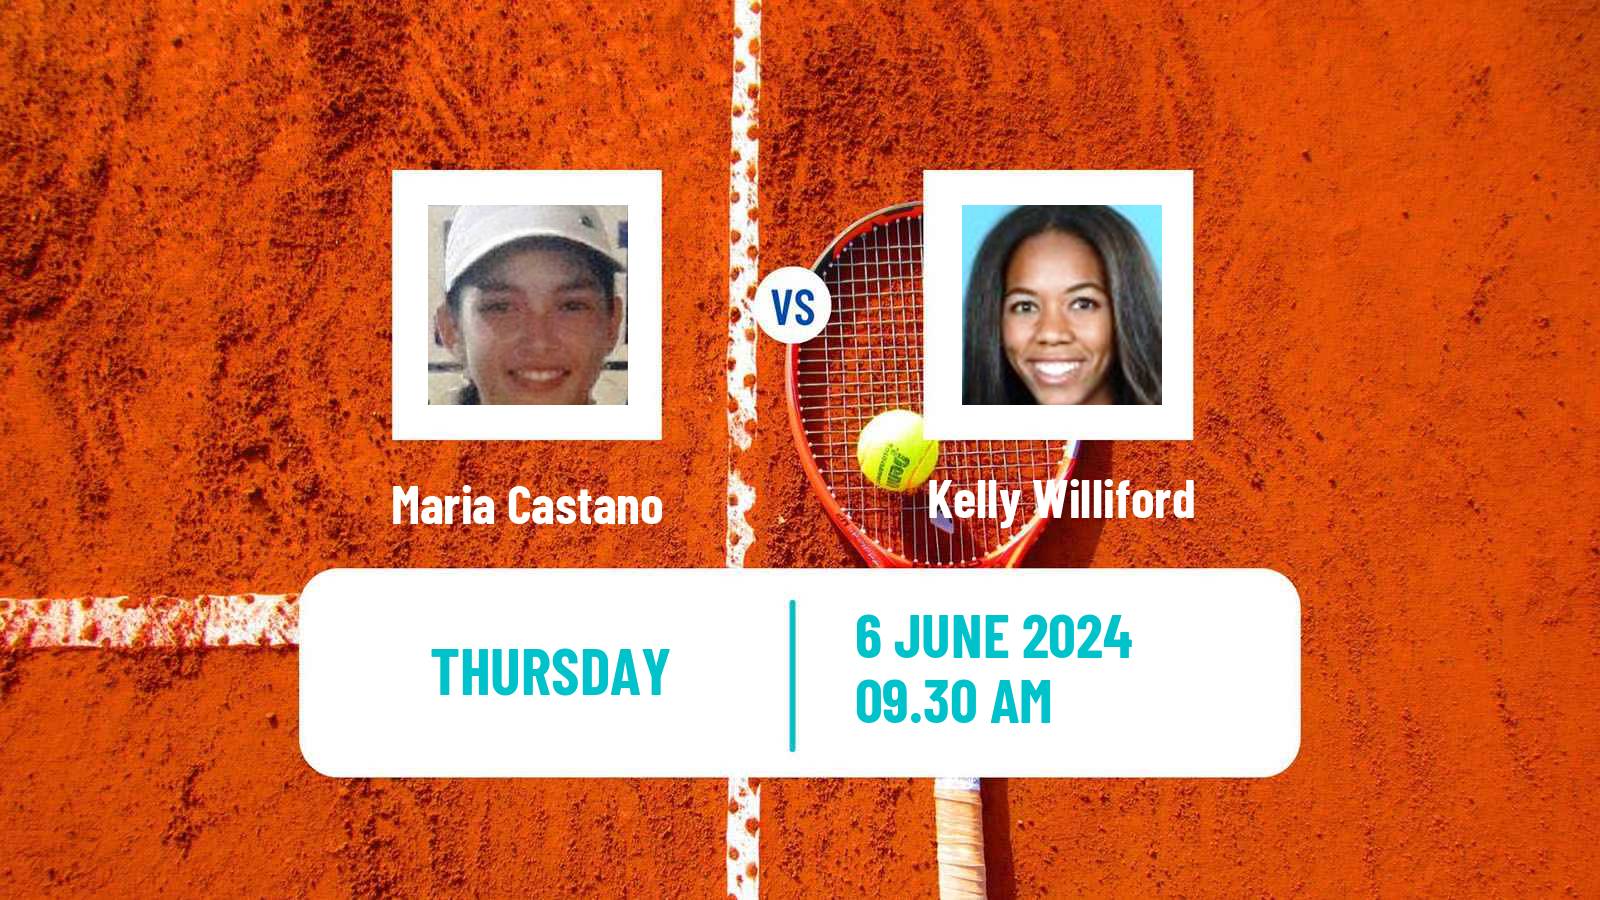 Tennis ITF W15 Santo Domingo Women Maria Castano - Kelly Williford